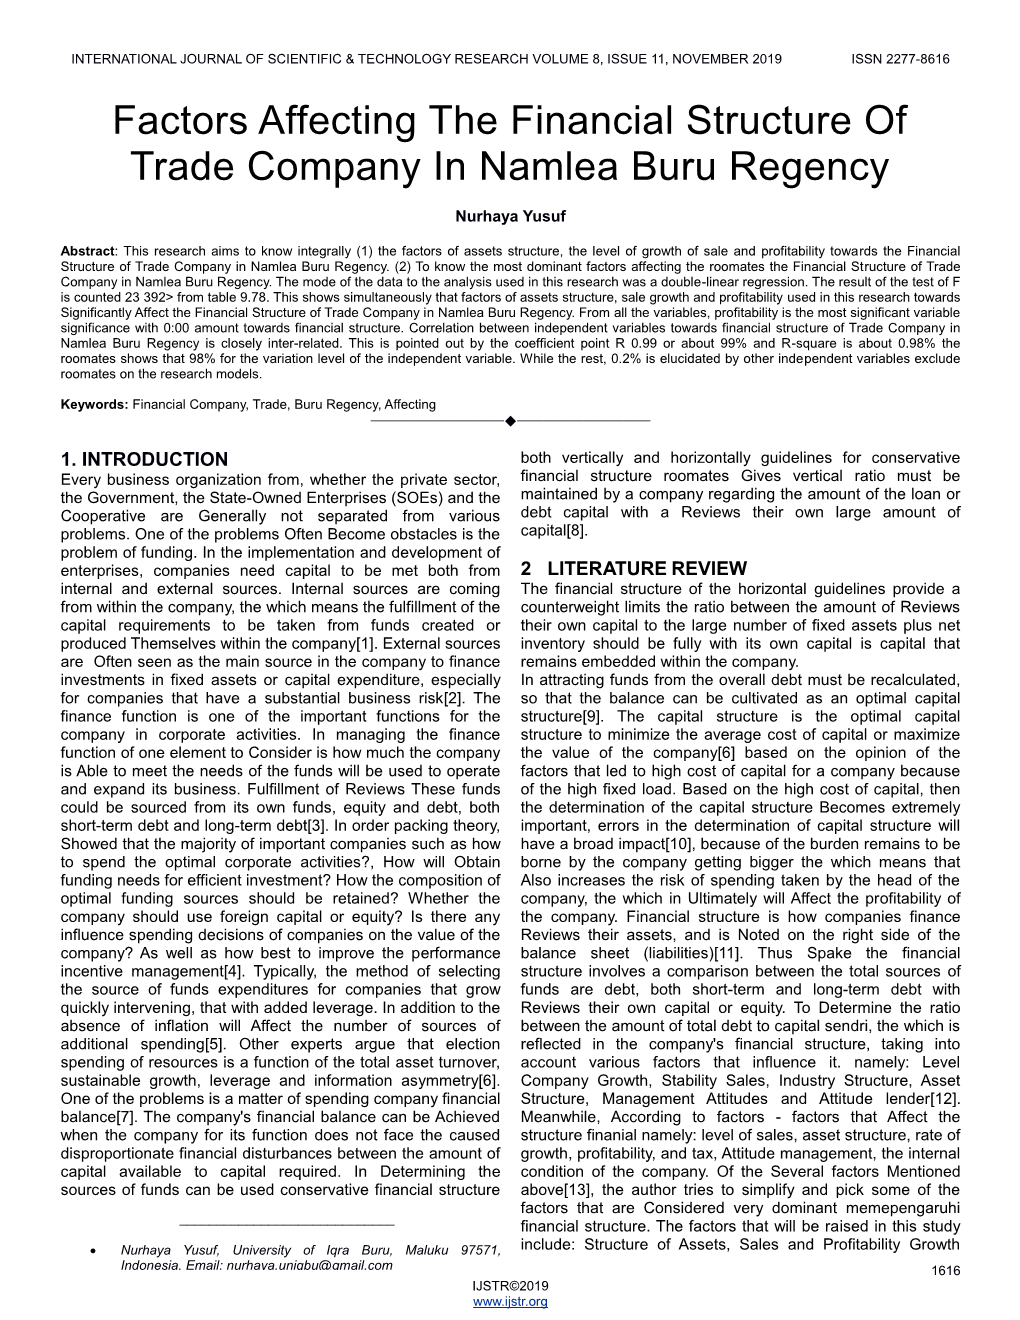 Factors Affecting the Financial Structure of Trade Company in Namlea Buru Regency